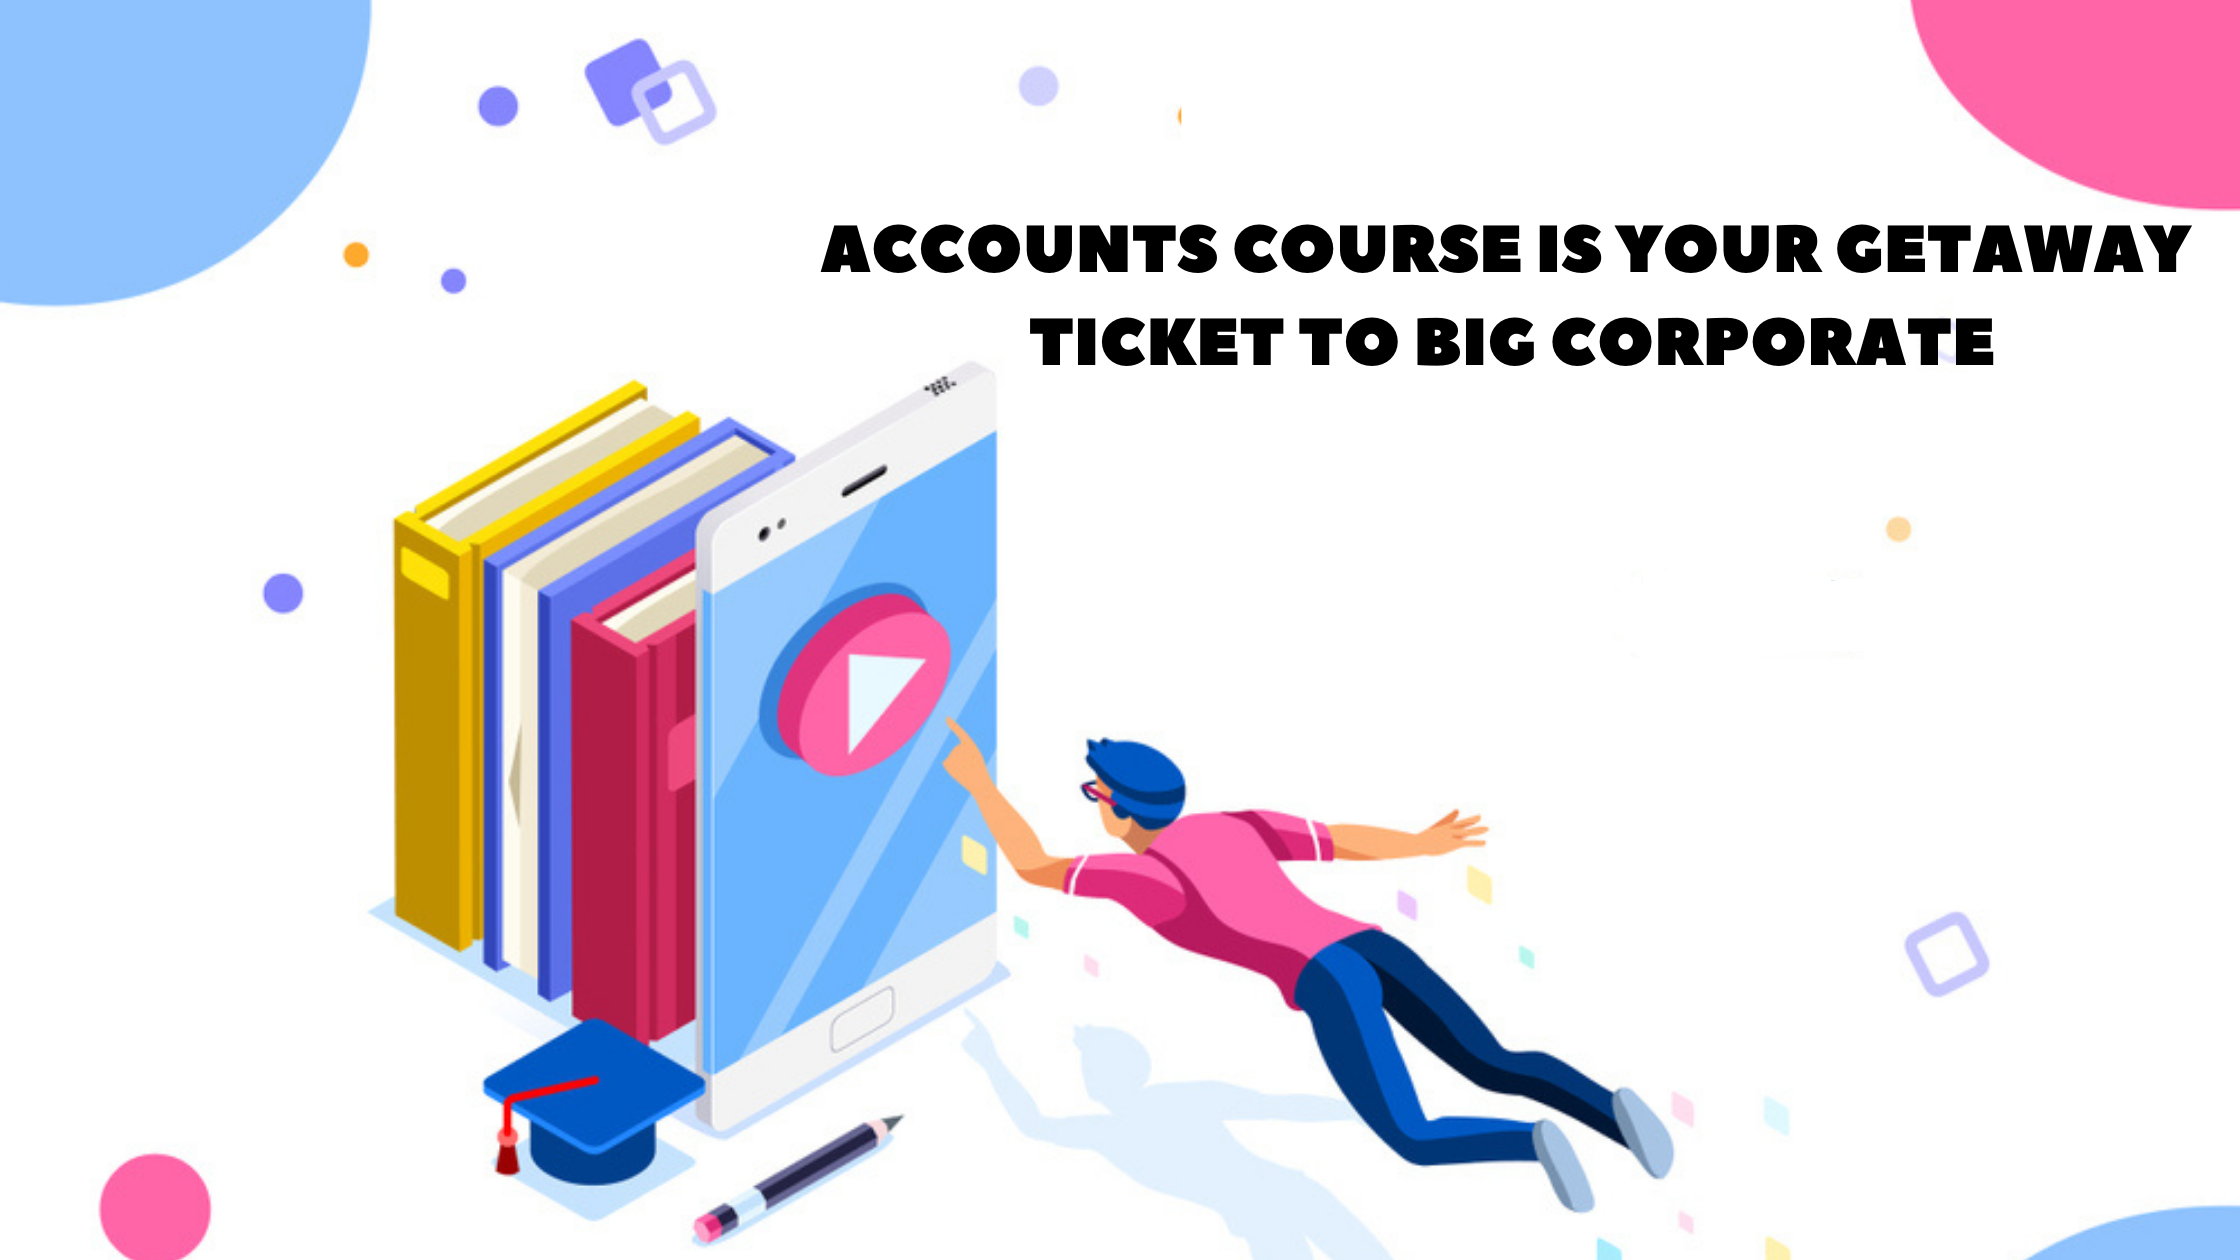 Accounts course